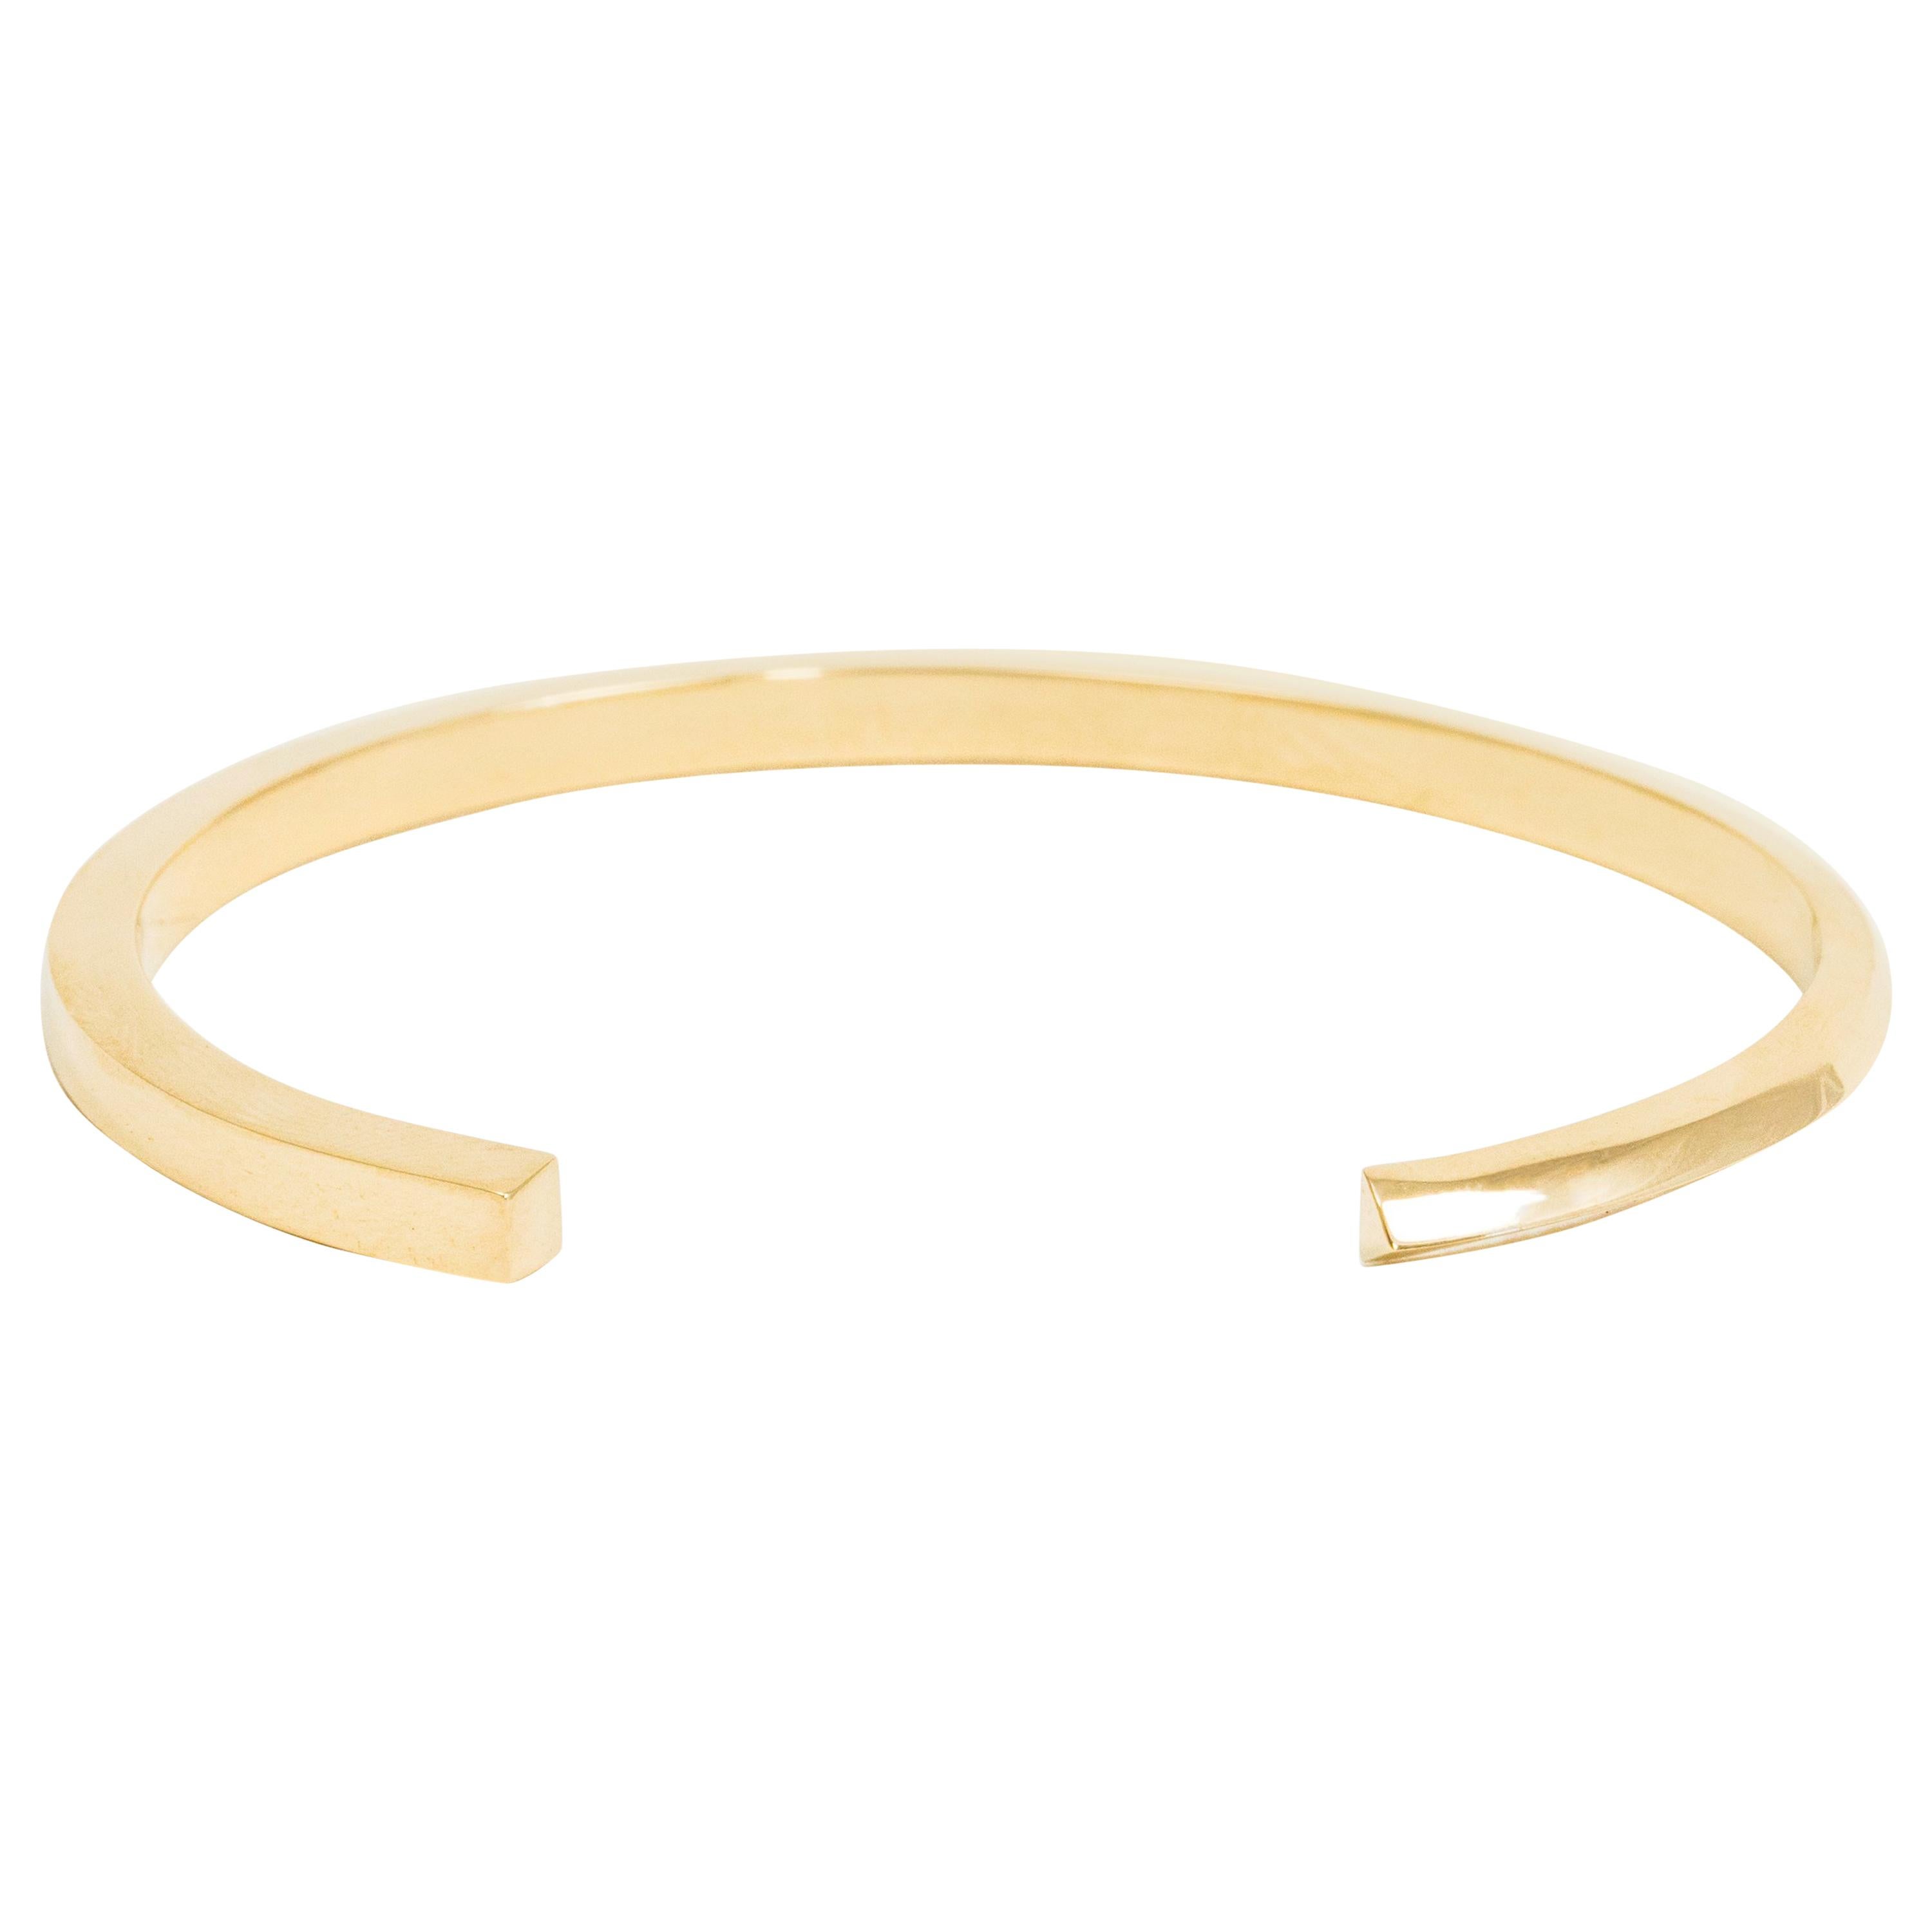 14K Gold Beaded Cuff Bracelet - Paul's Jewelry-Jewelry is Personal.